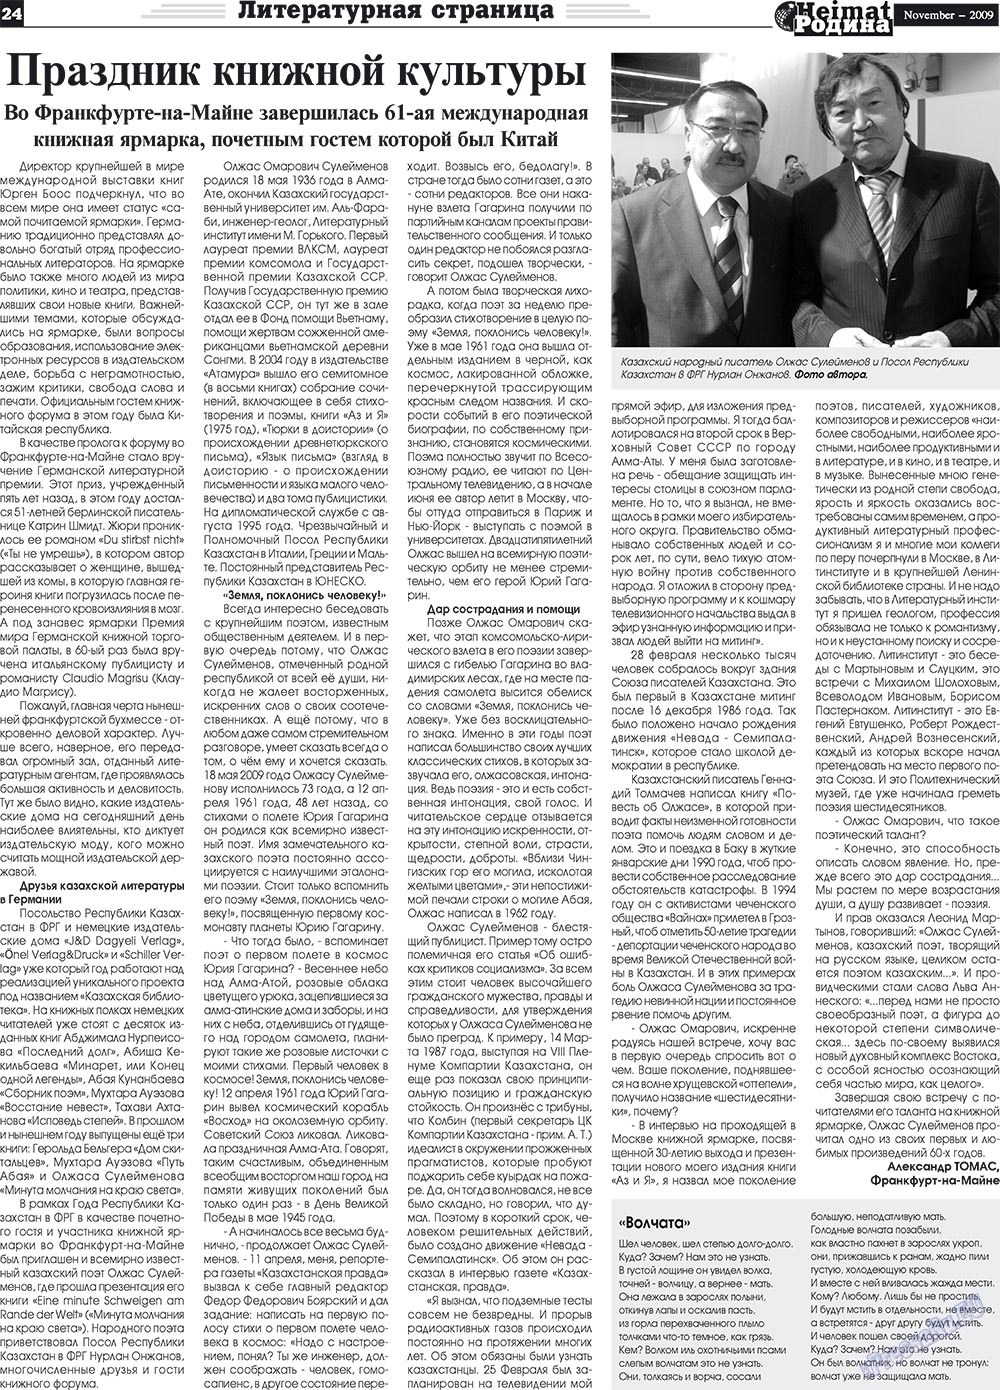 Heimat-Родина, газета. 2009 №11 стр.24